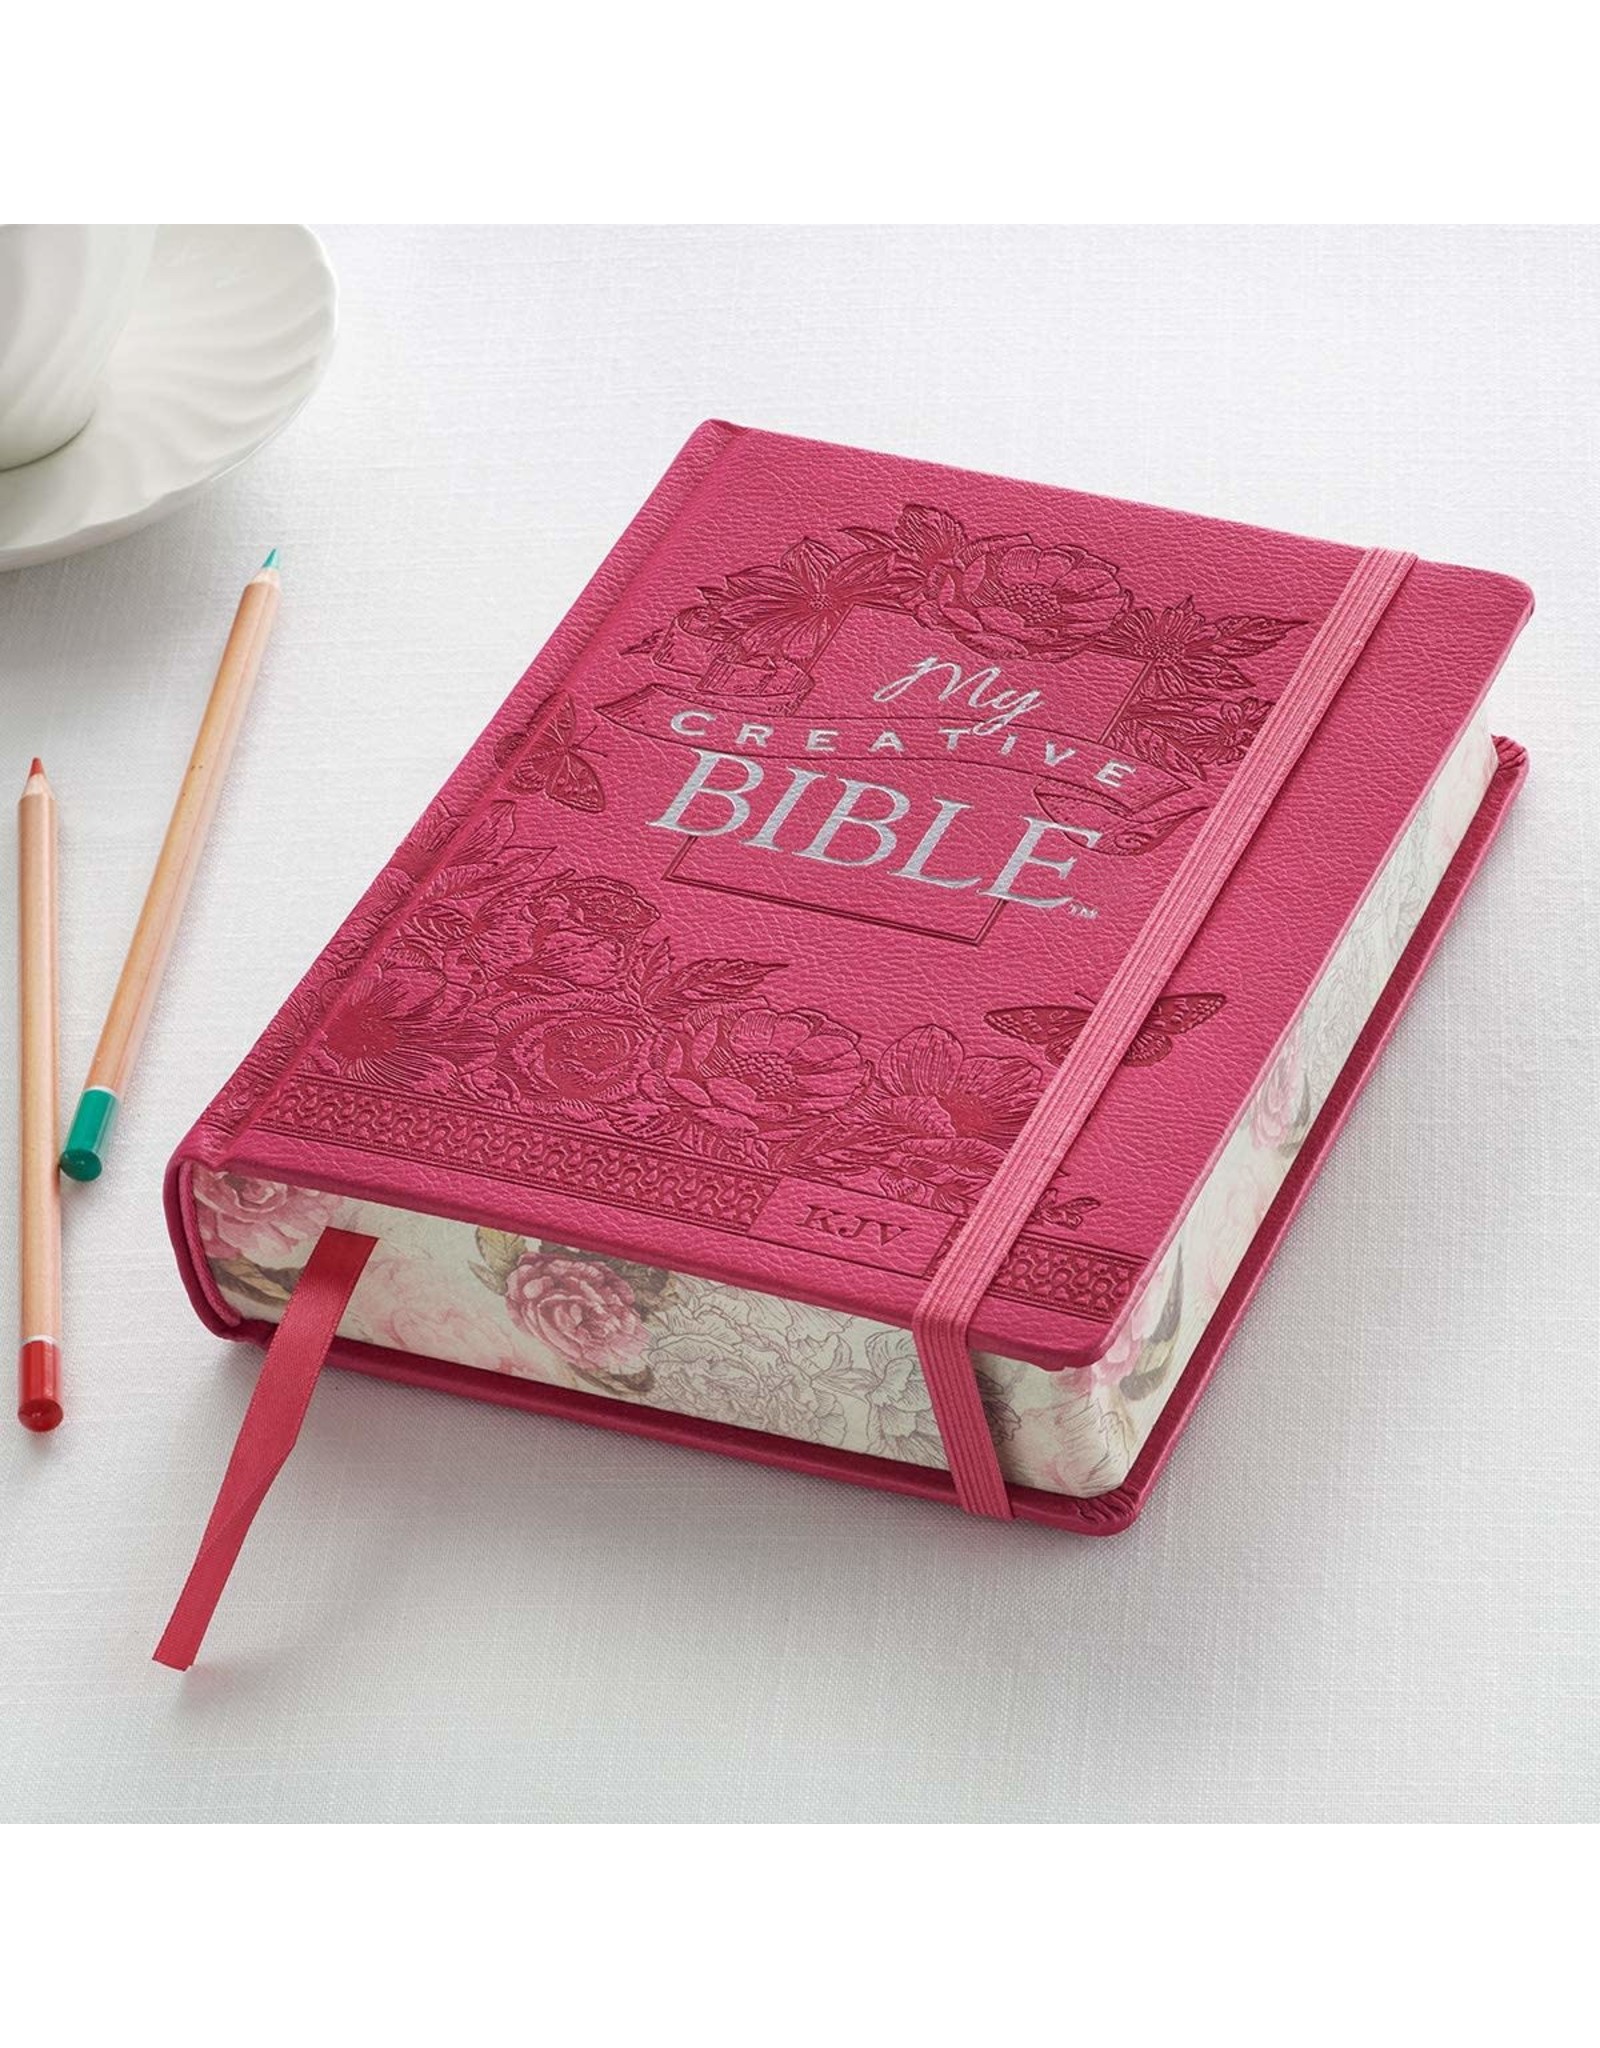 Christian Art Publishers KJV Holy Bible, My Creative Bible, Pink Hardcover Faux Leather Journaling Bible w/Ribbon Marker